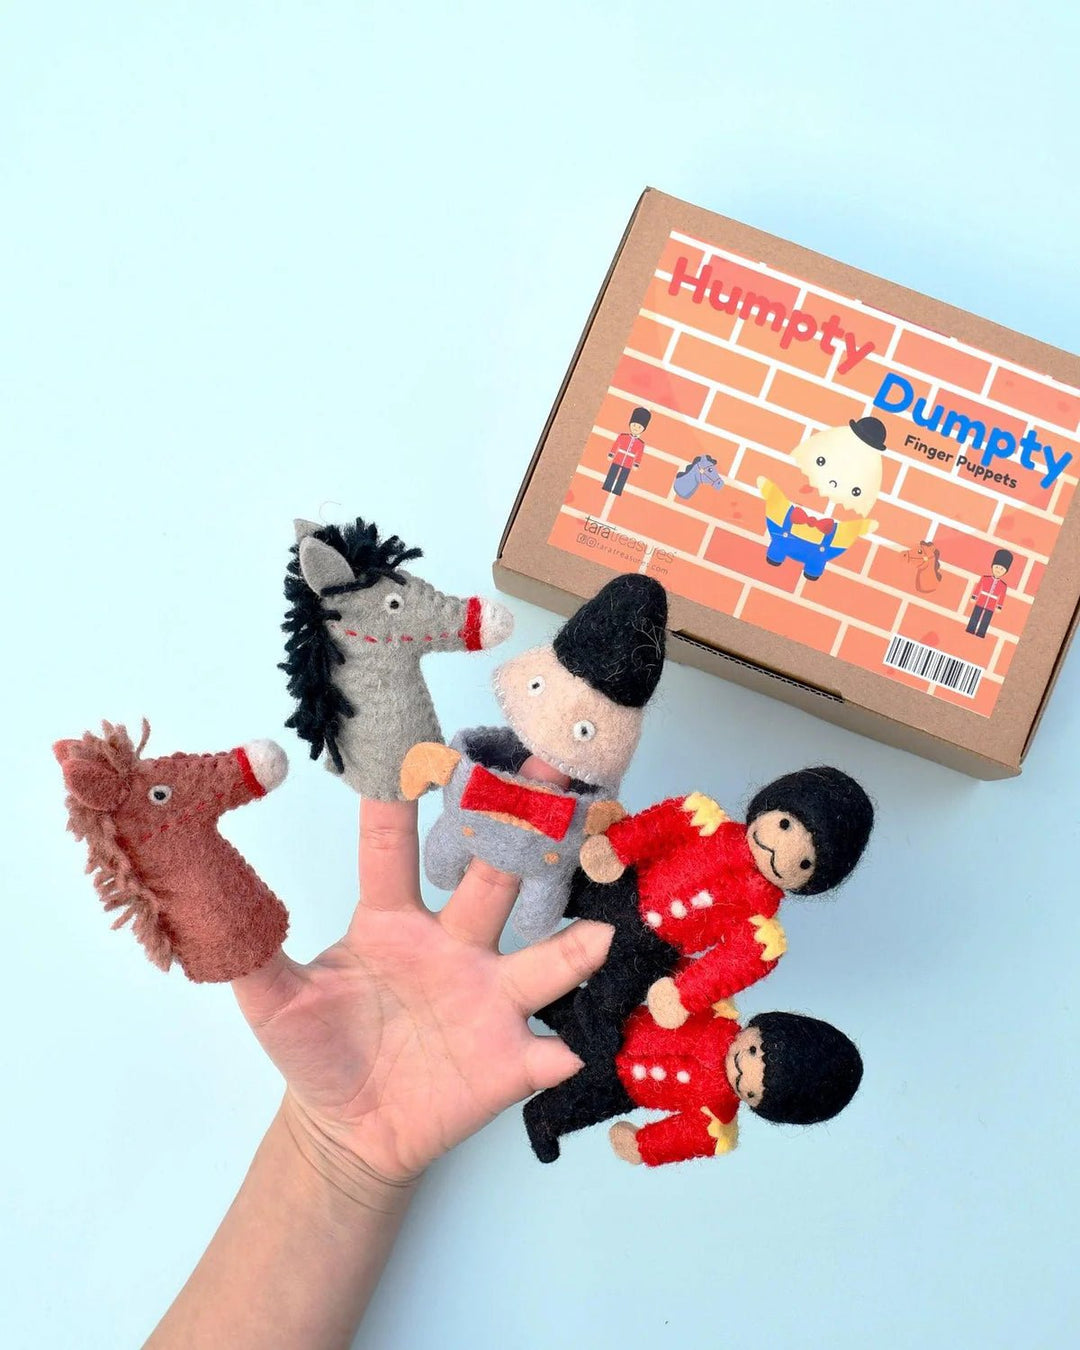 Tara Treasures Humpty Dumpty Finger Puppet Set - #HolaNanu#NDIS #creativekids